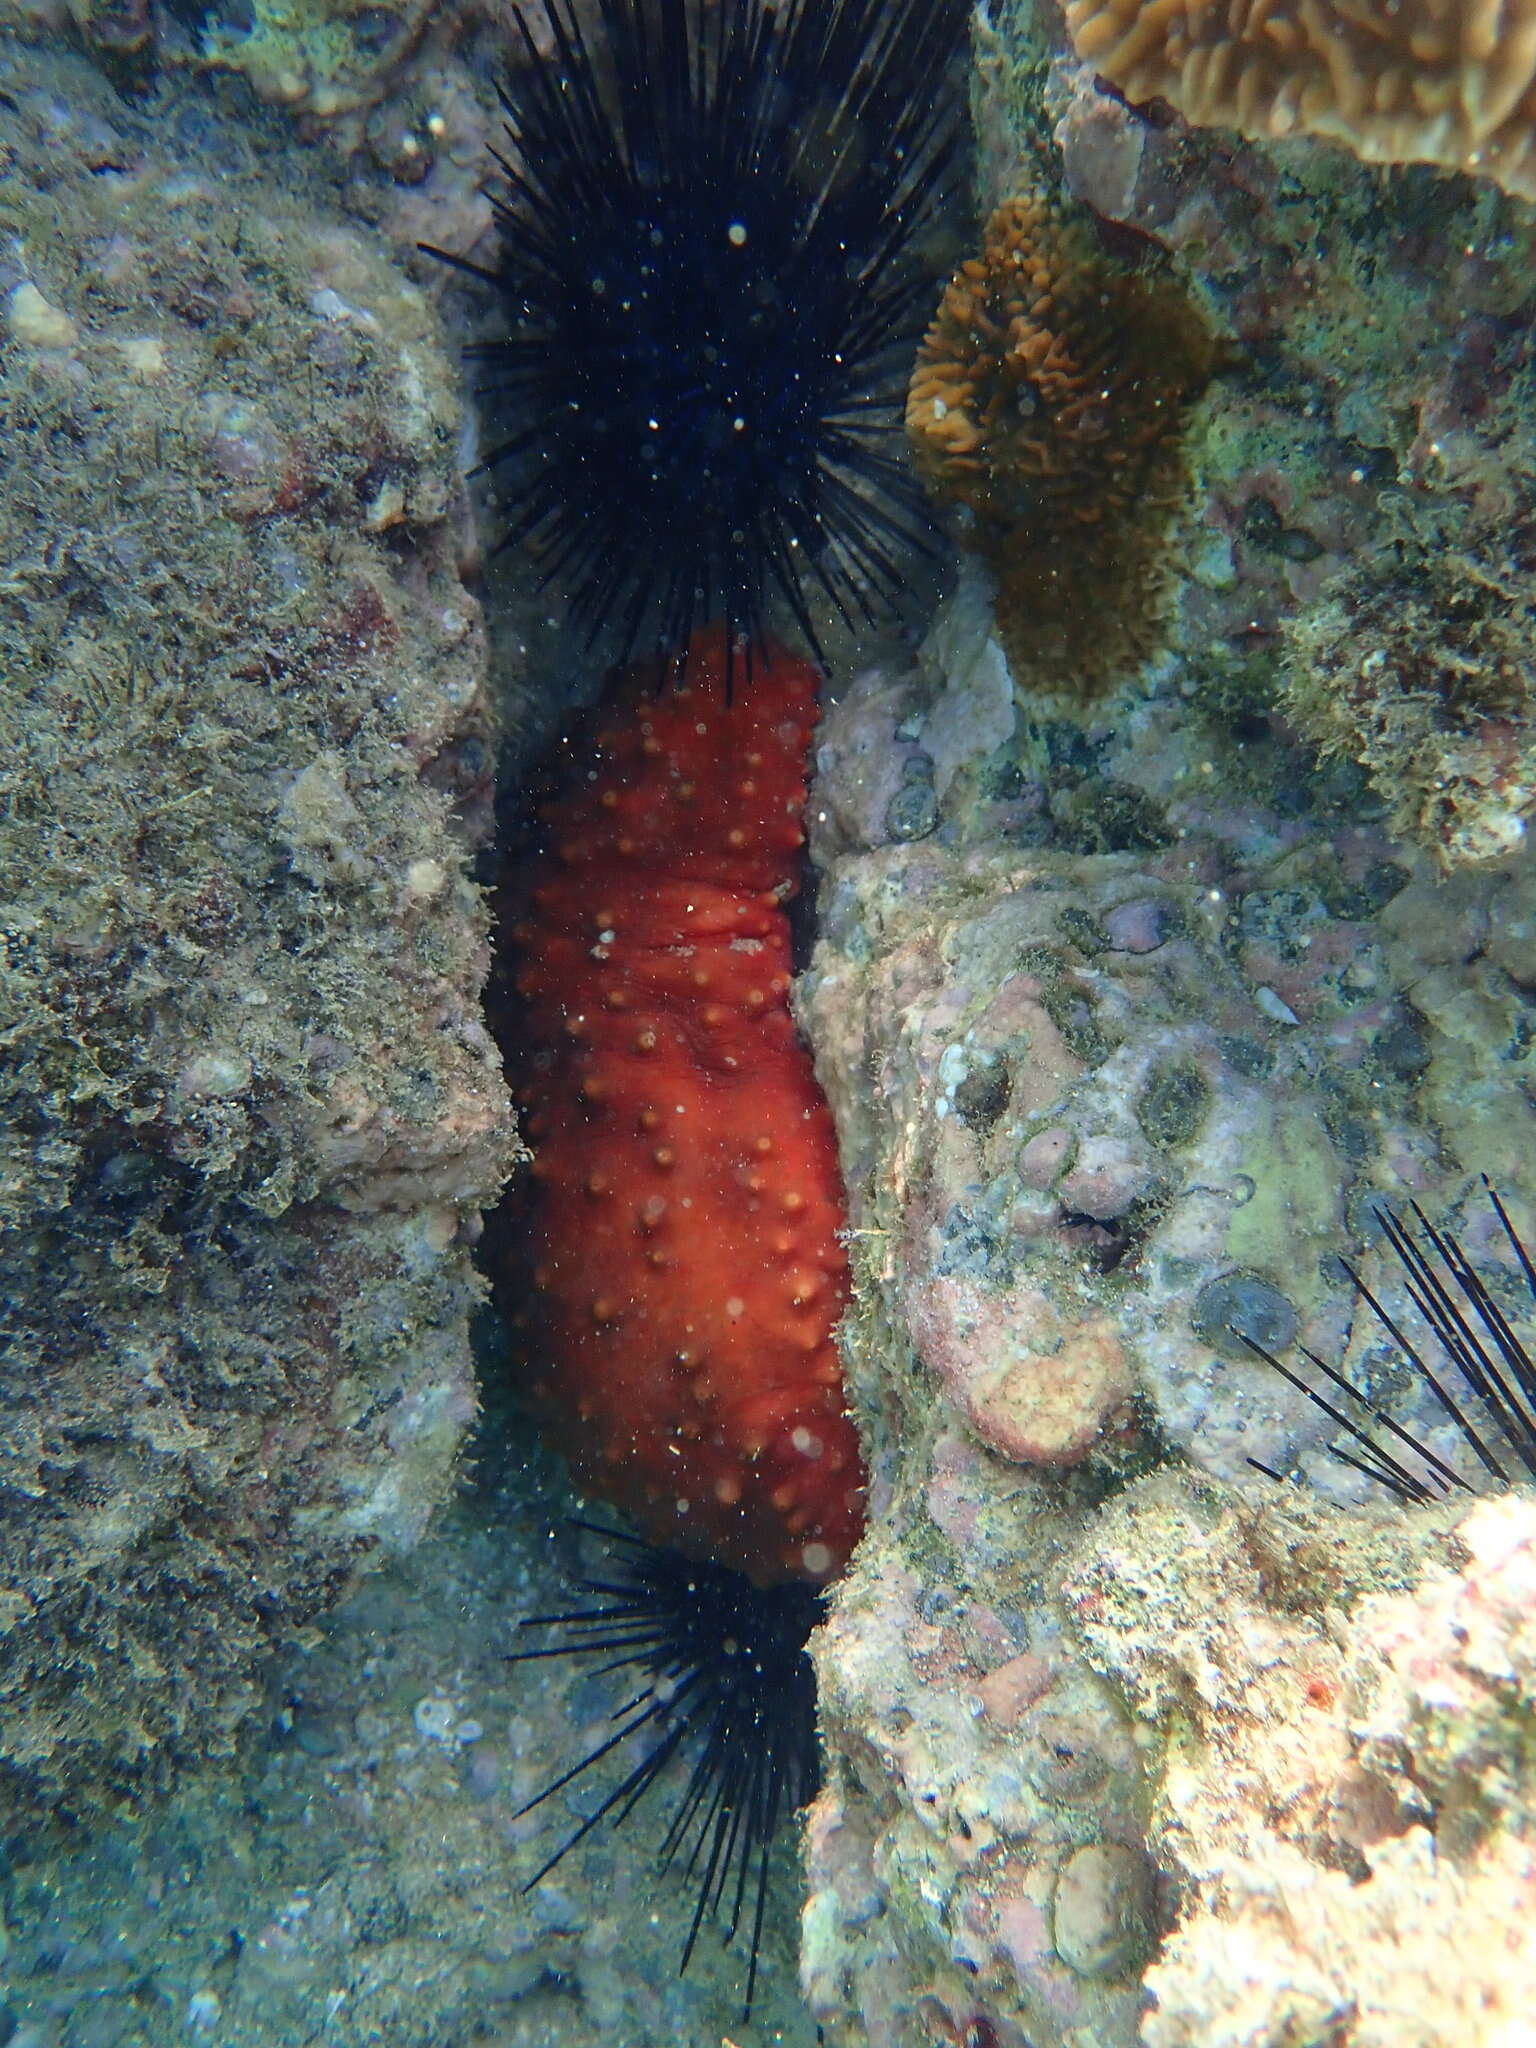 Image of Brown Sea Cucumber